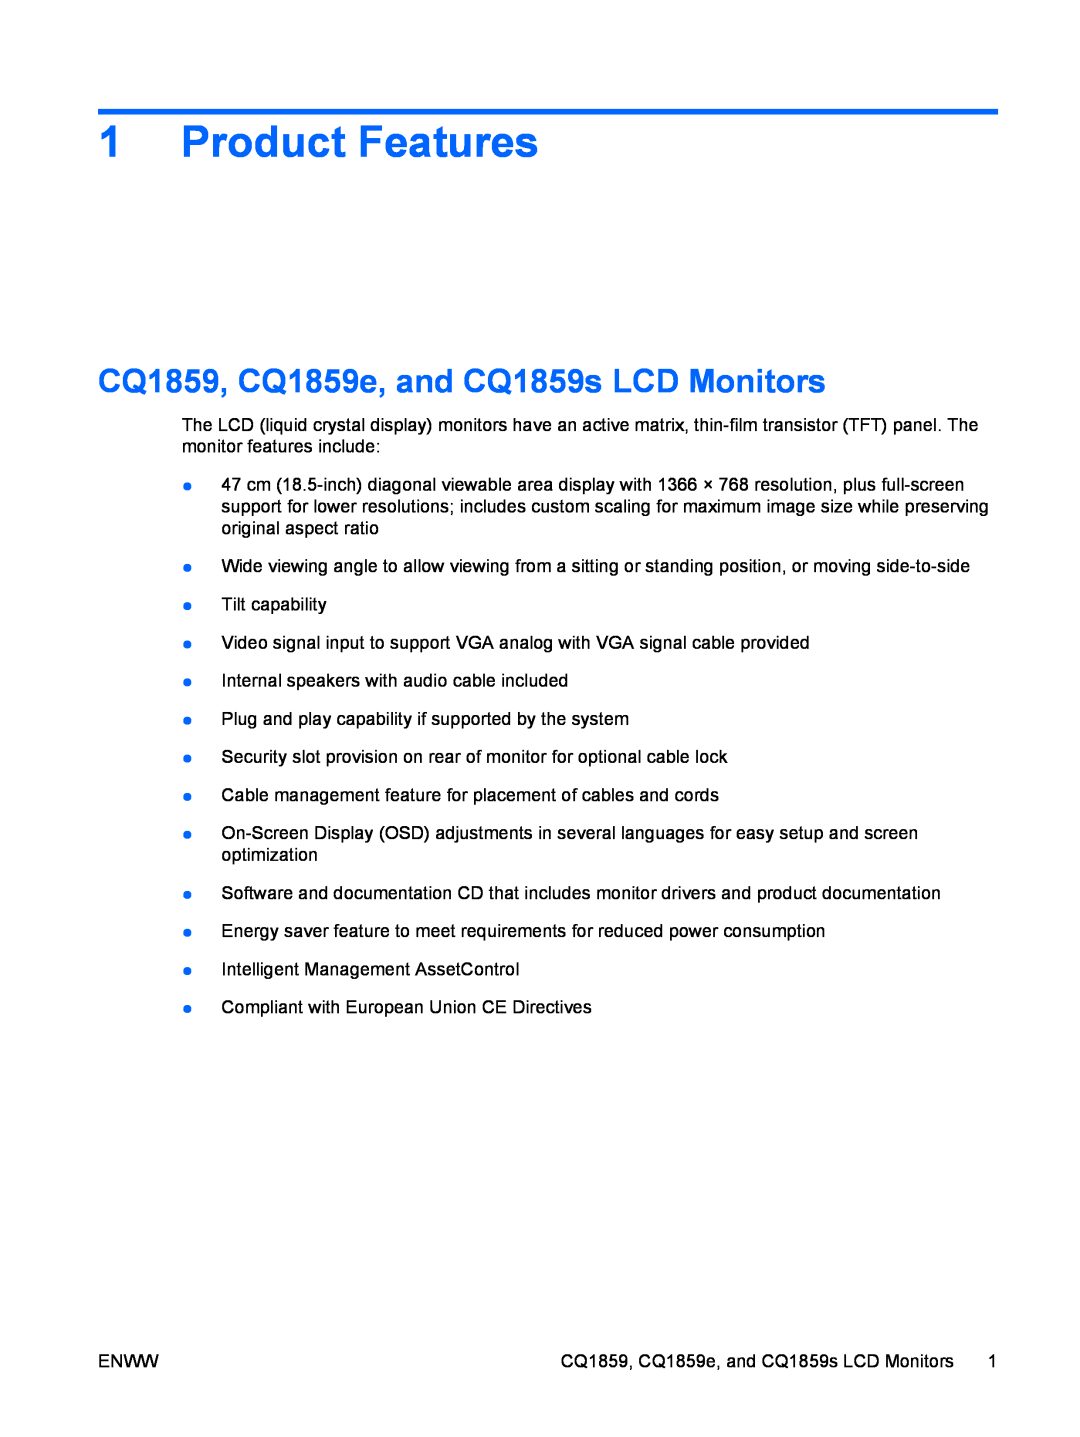 HP CQ1859E manual Product Features, CQ1859, CQ1859e, and CQ1859s LCD Monitors 